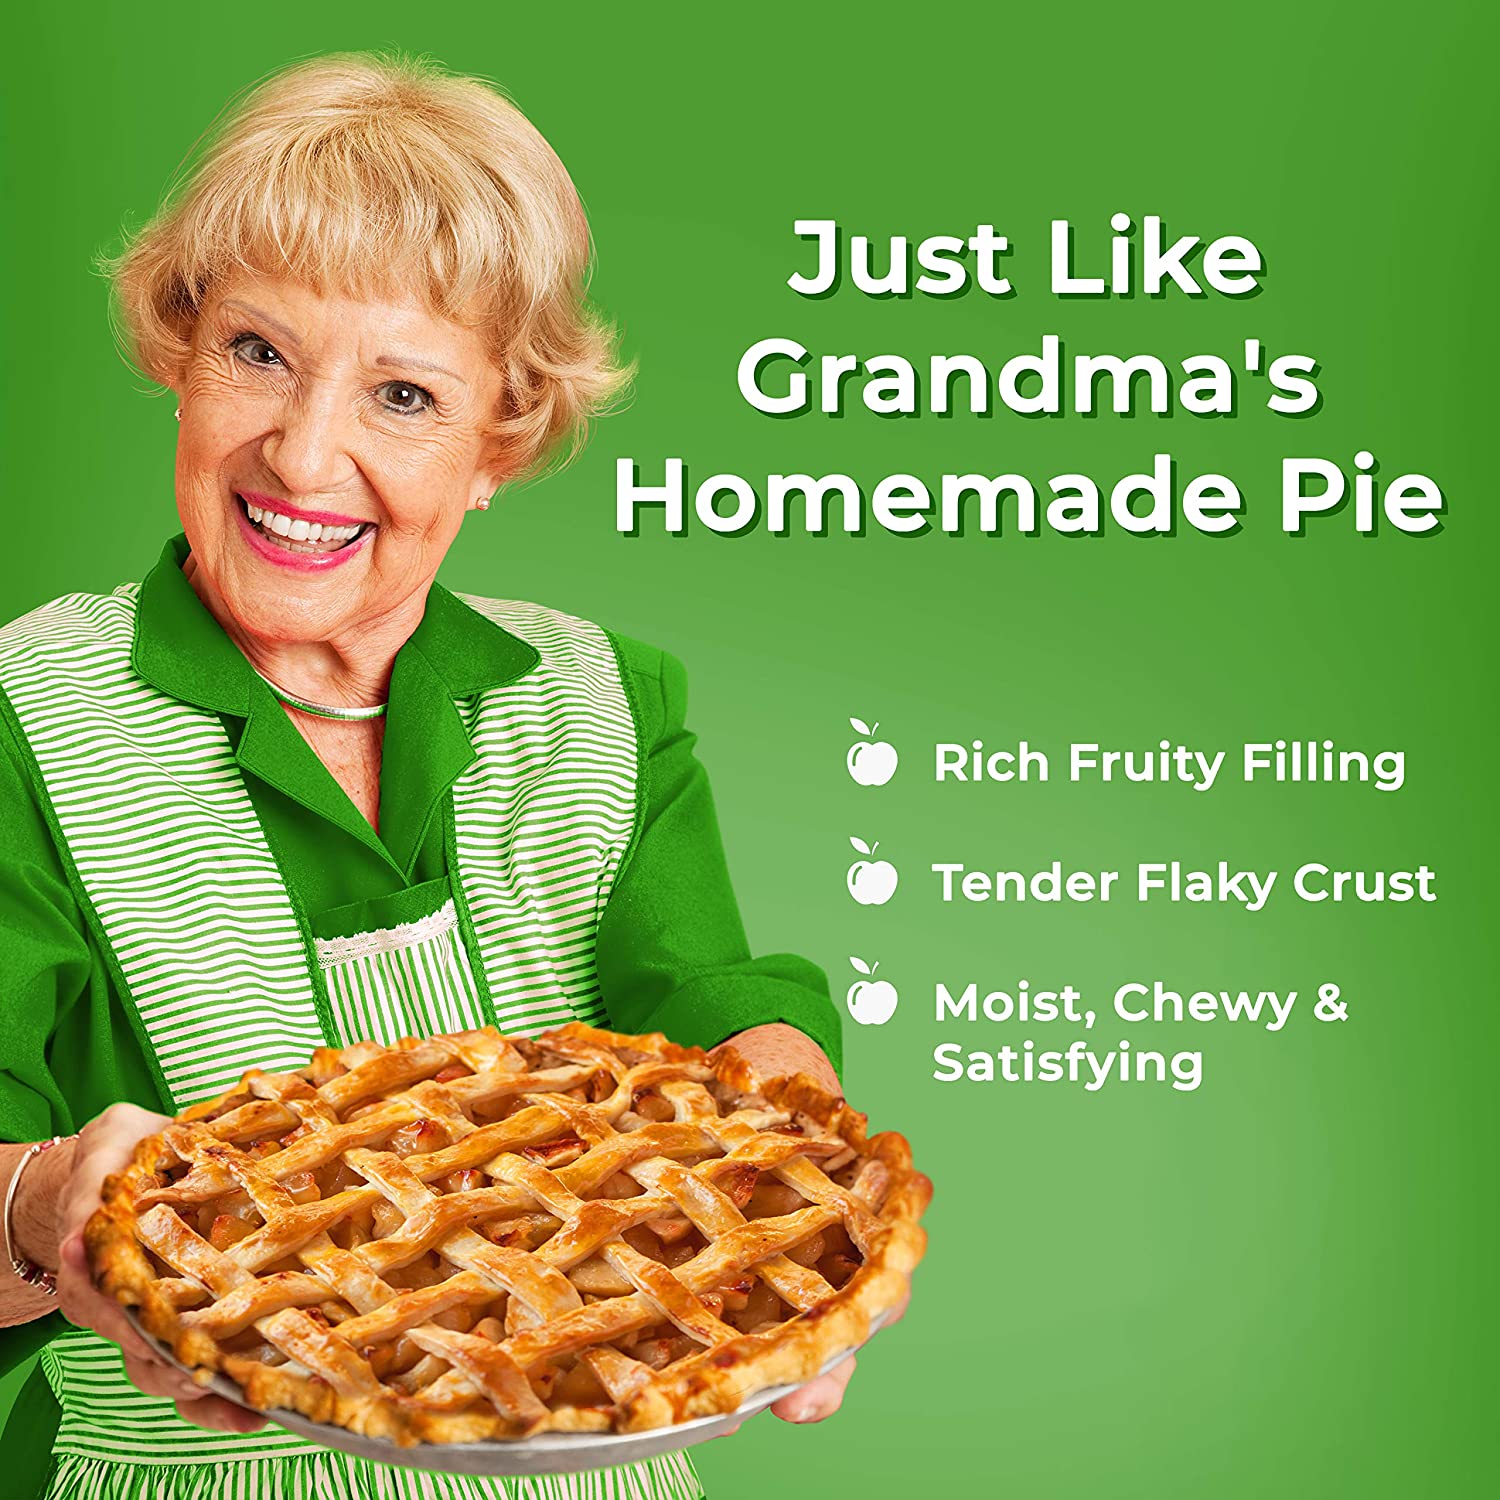 Grandma's homemade apple pie